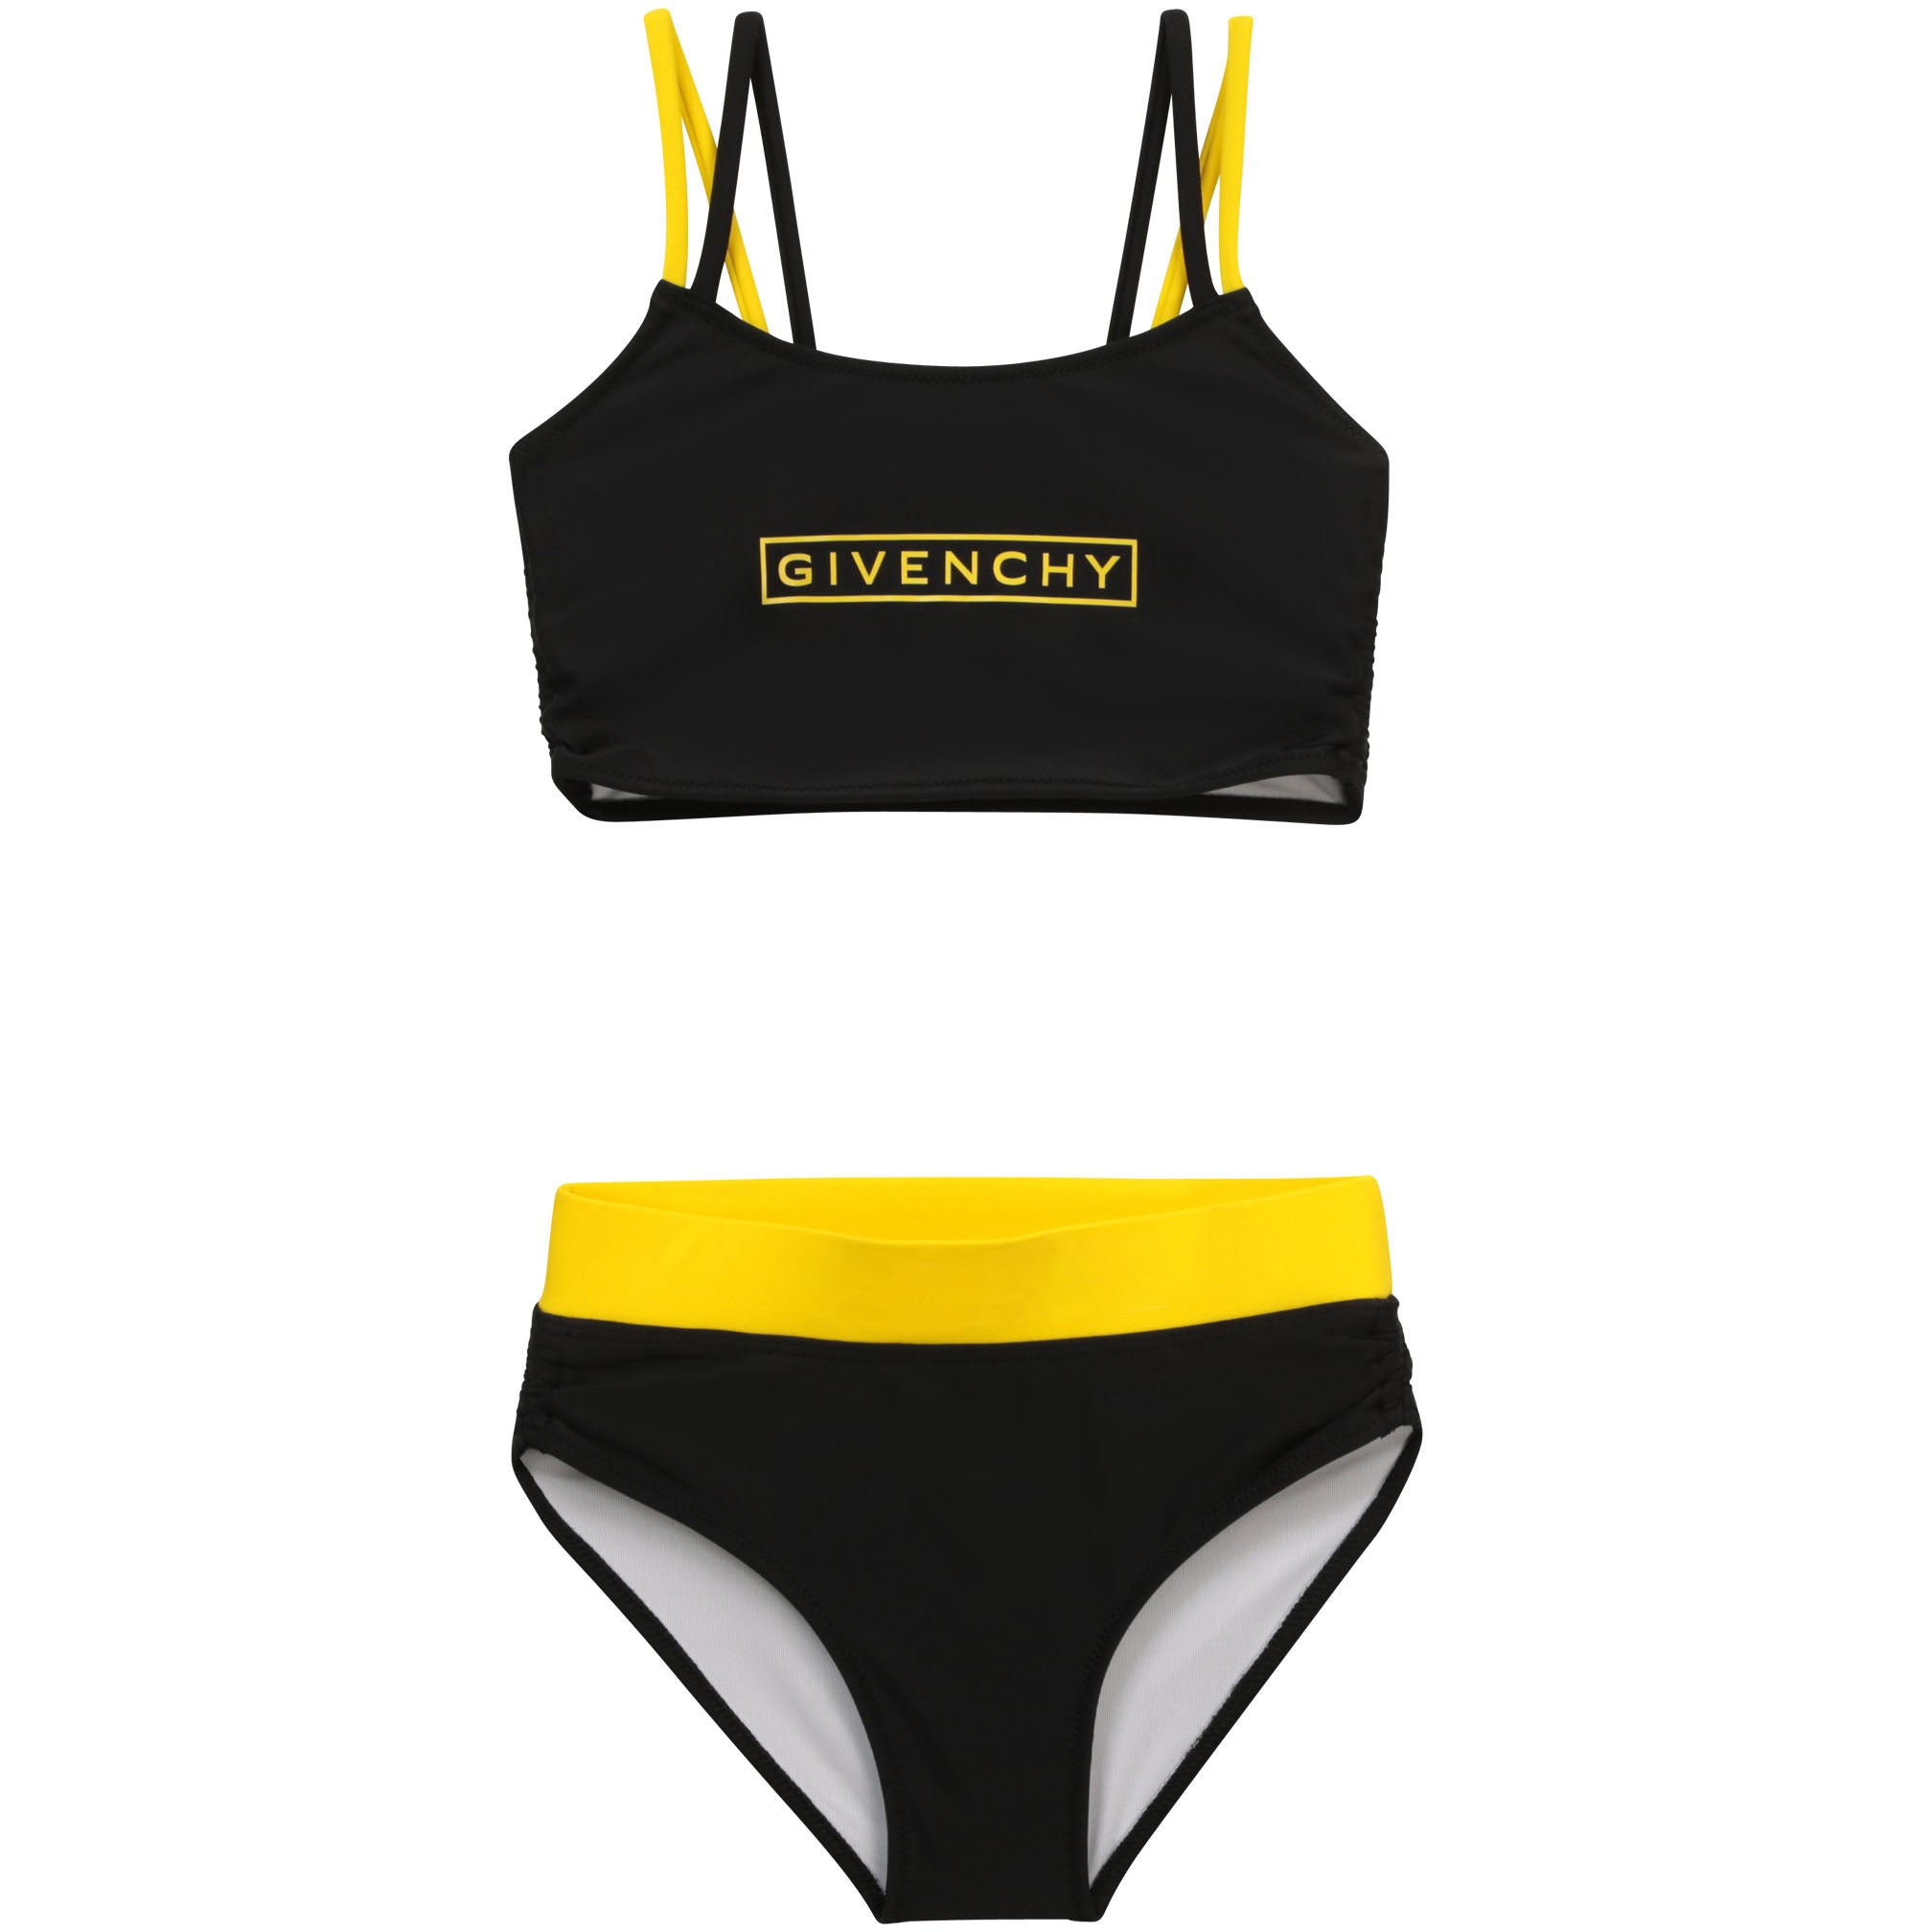 Givenchy Black and Yellow Bikini